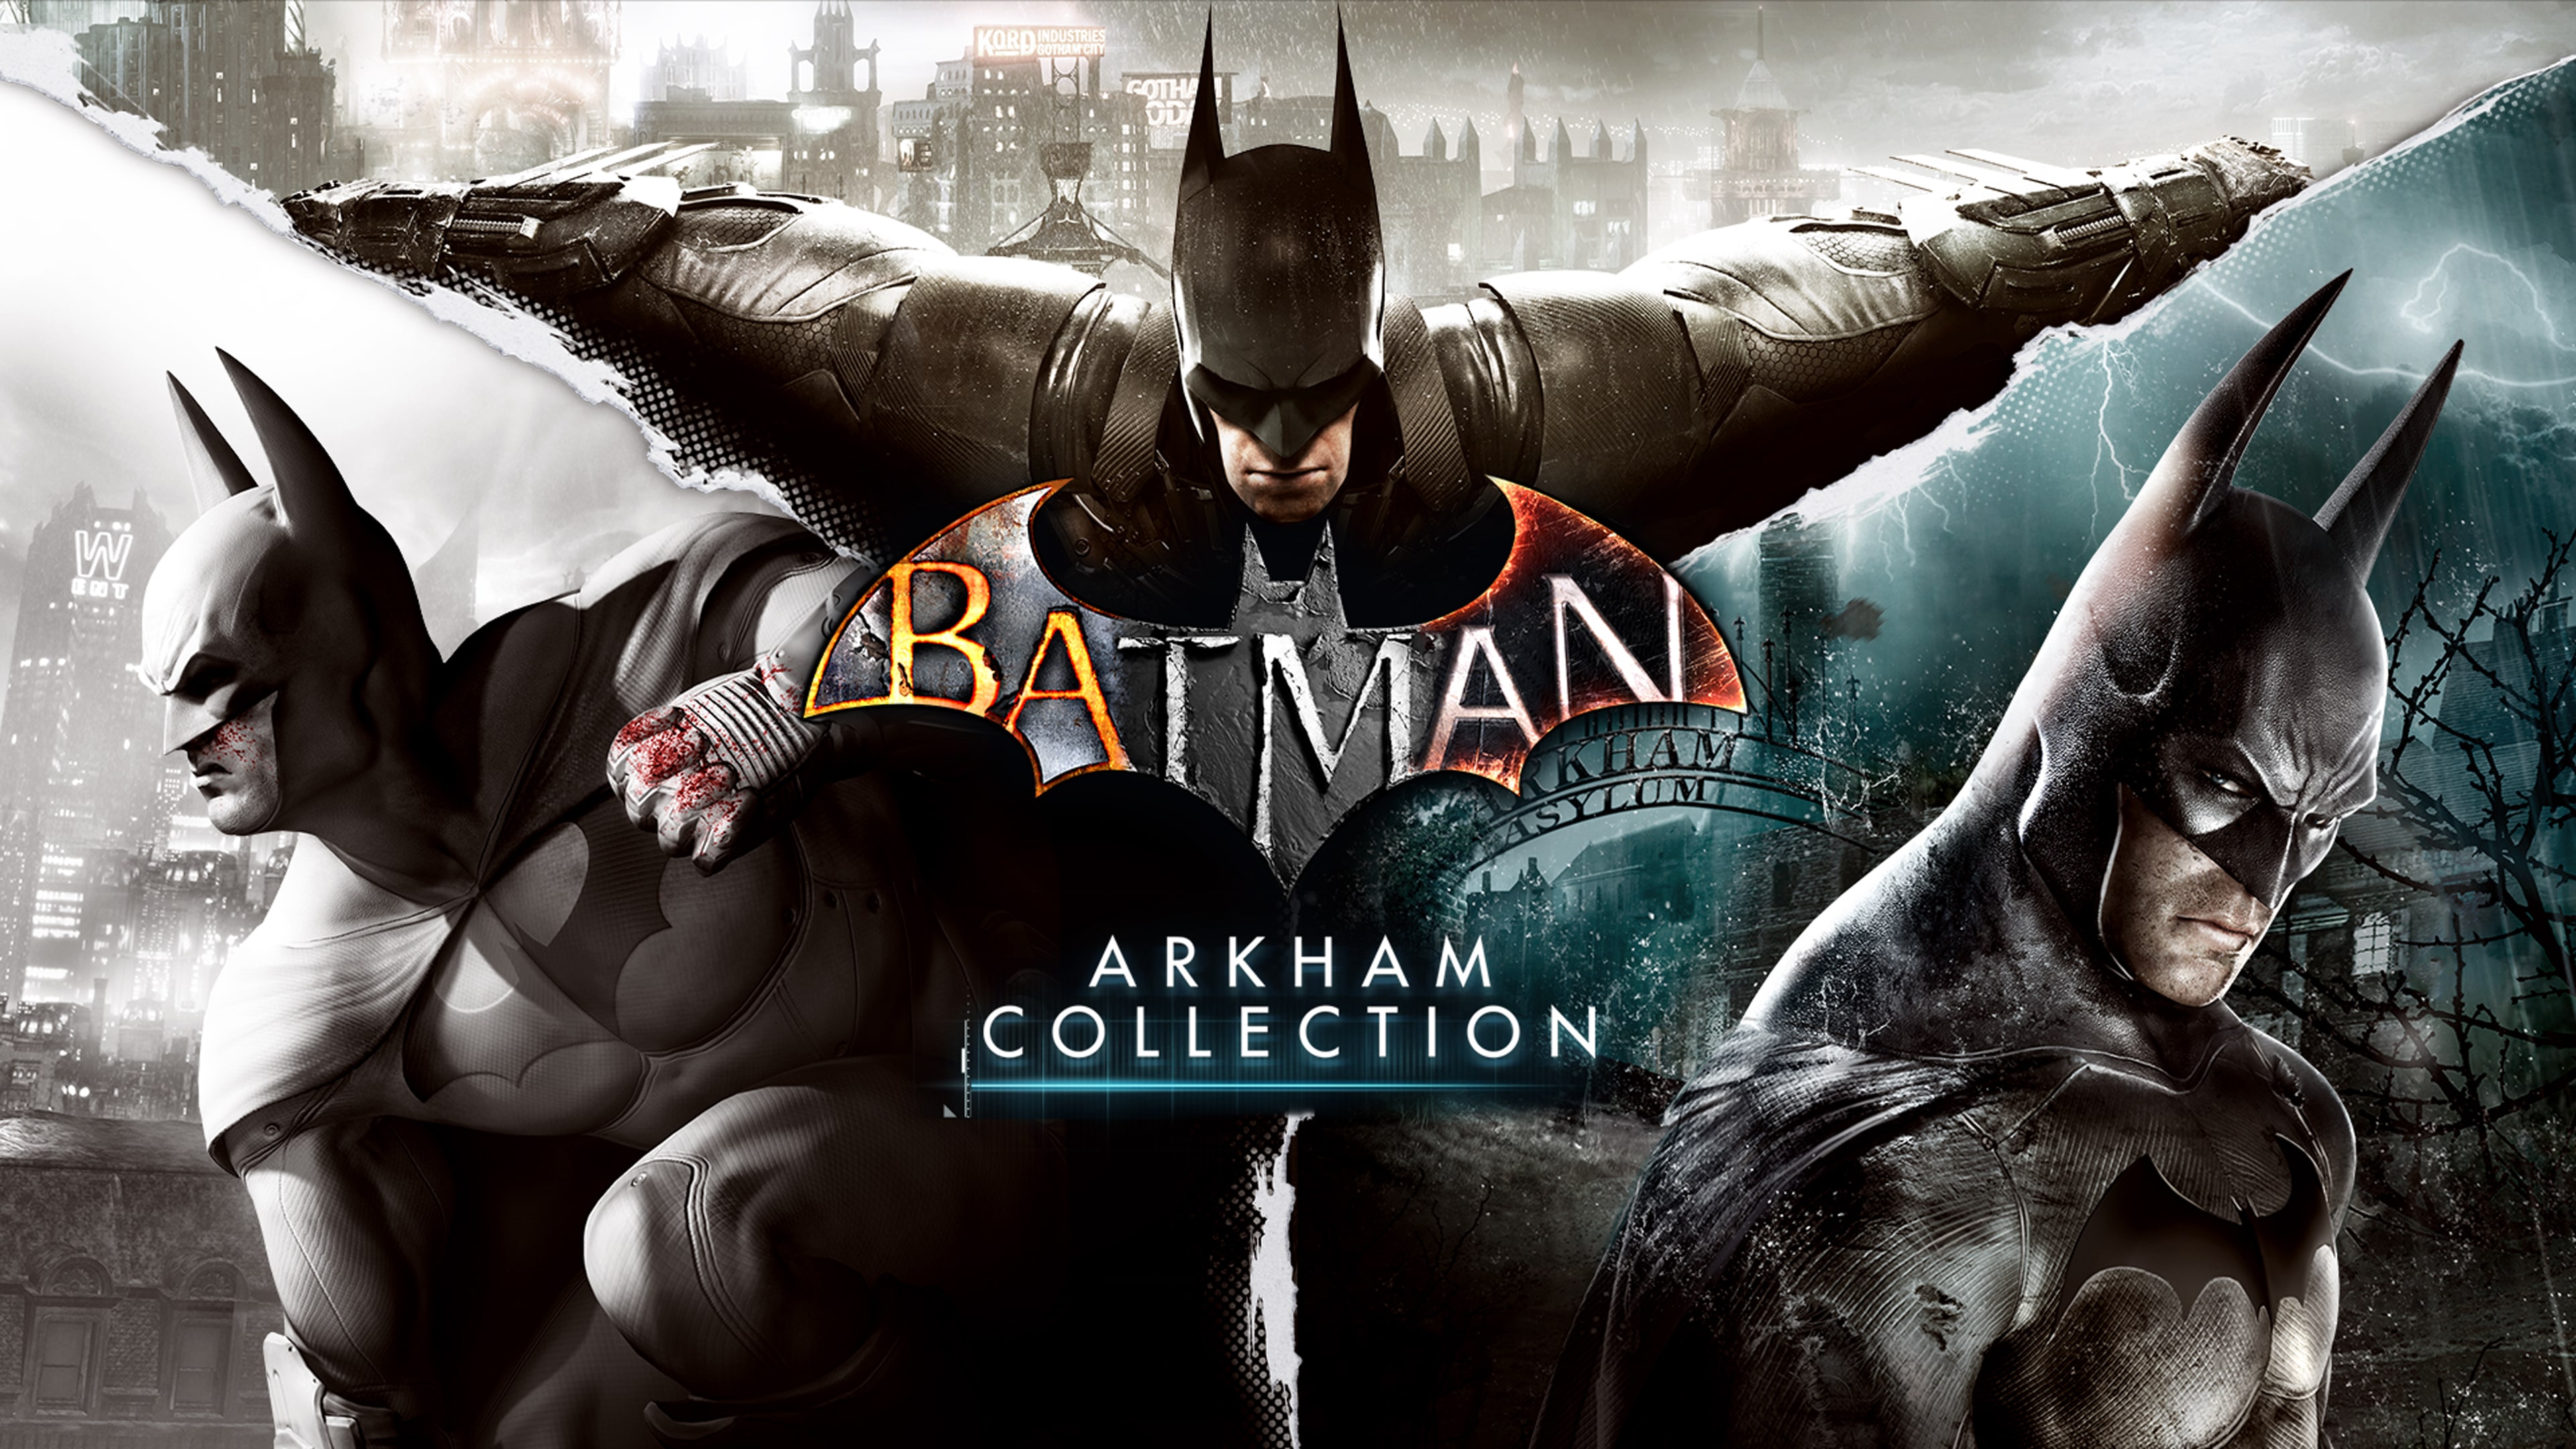 Batman: Arkham Collection (English, Korean)